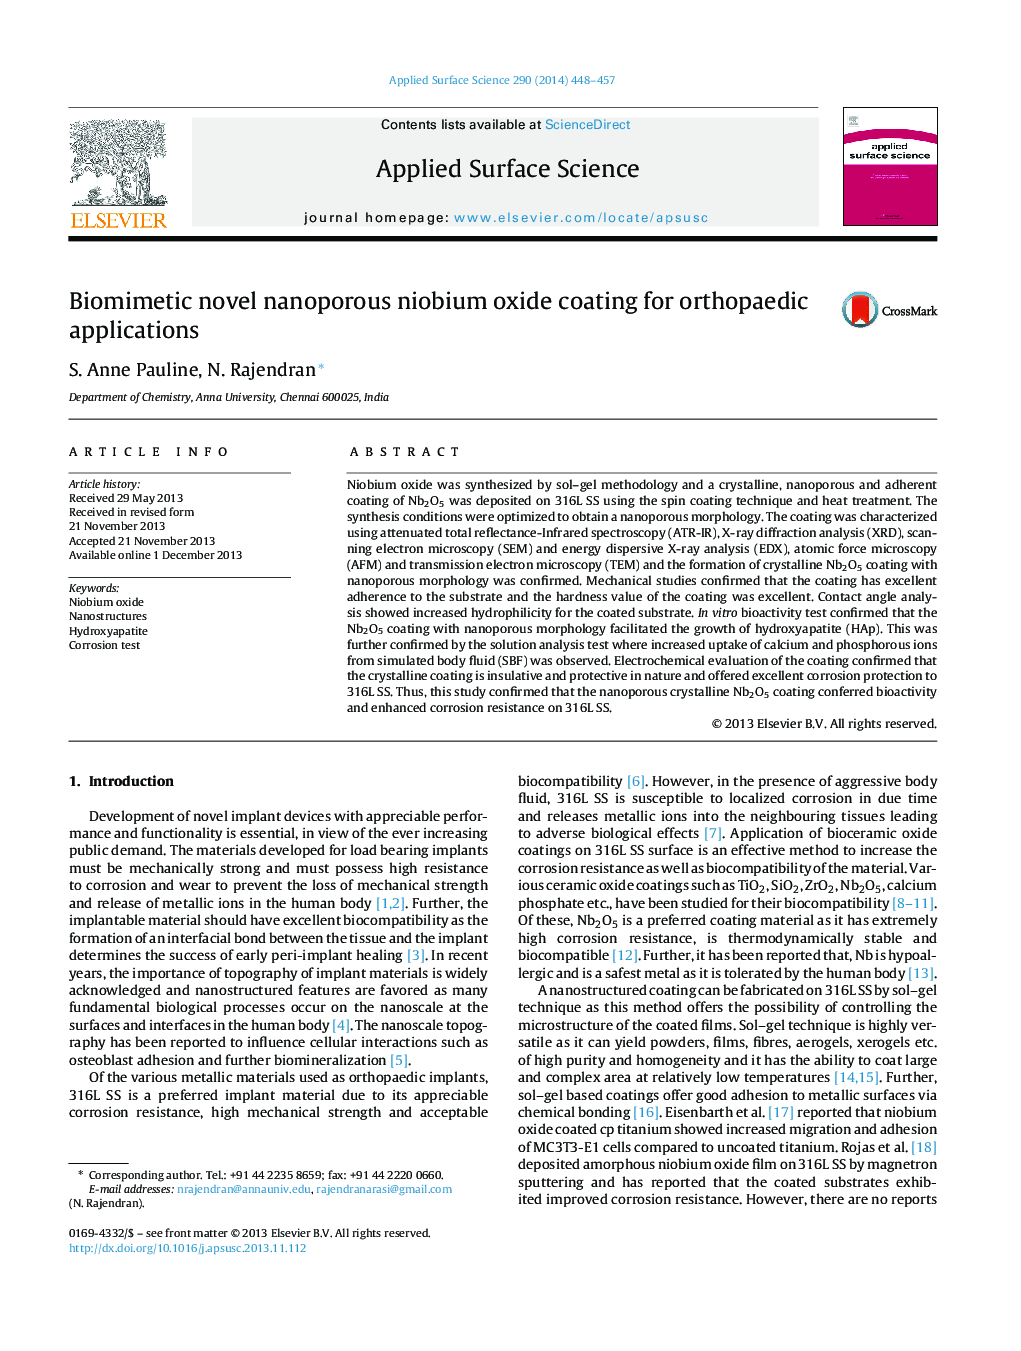 Biomimetic novel nanoporous niobium oxide coating for orthopaedic applications